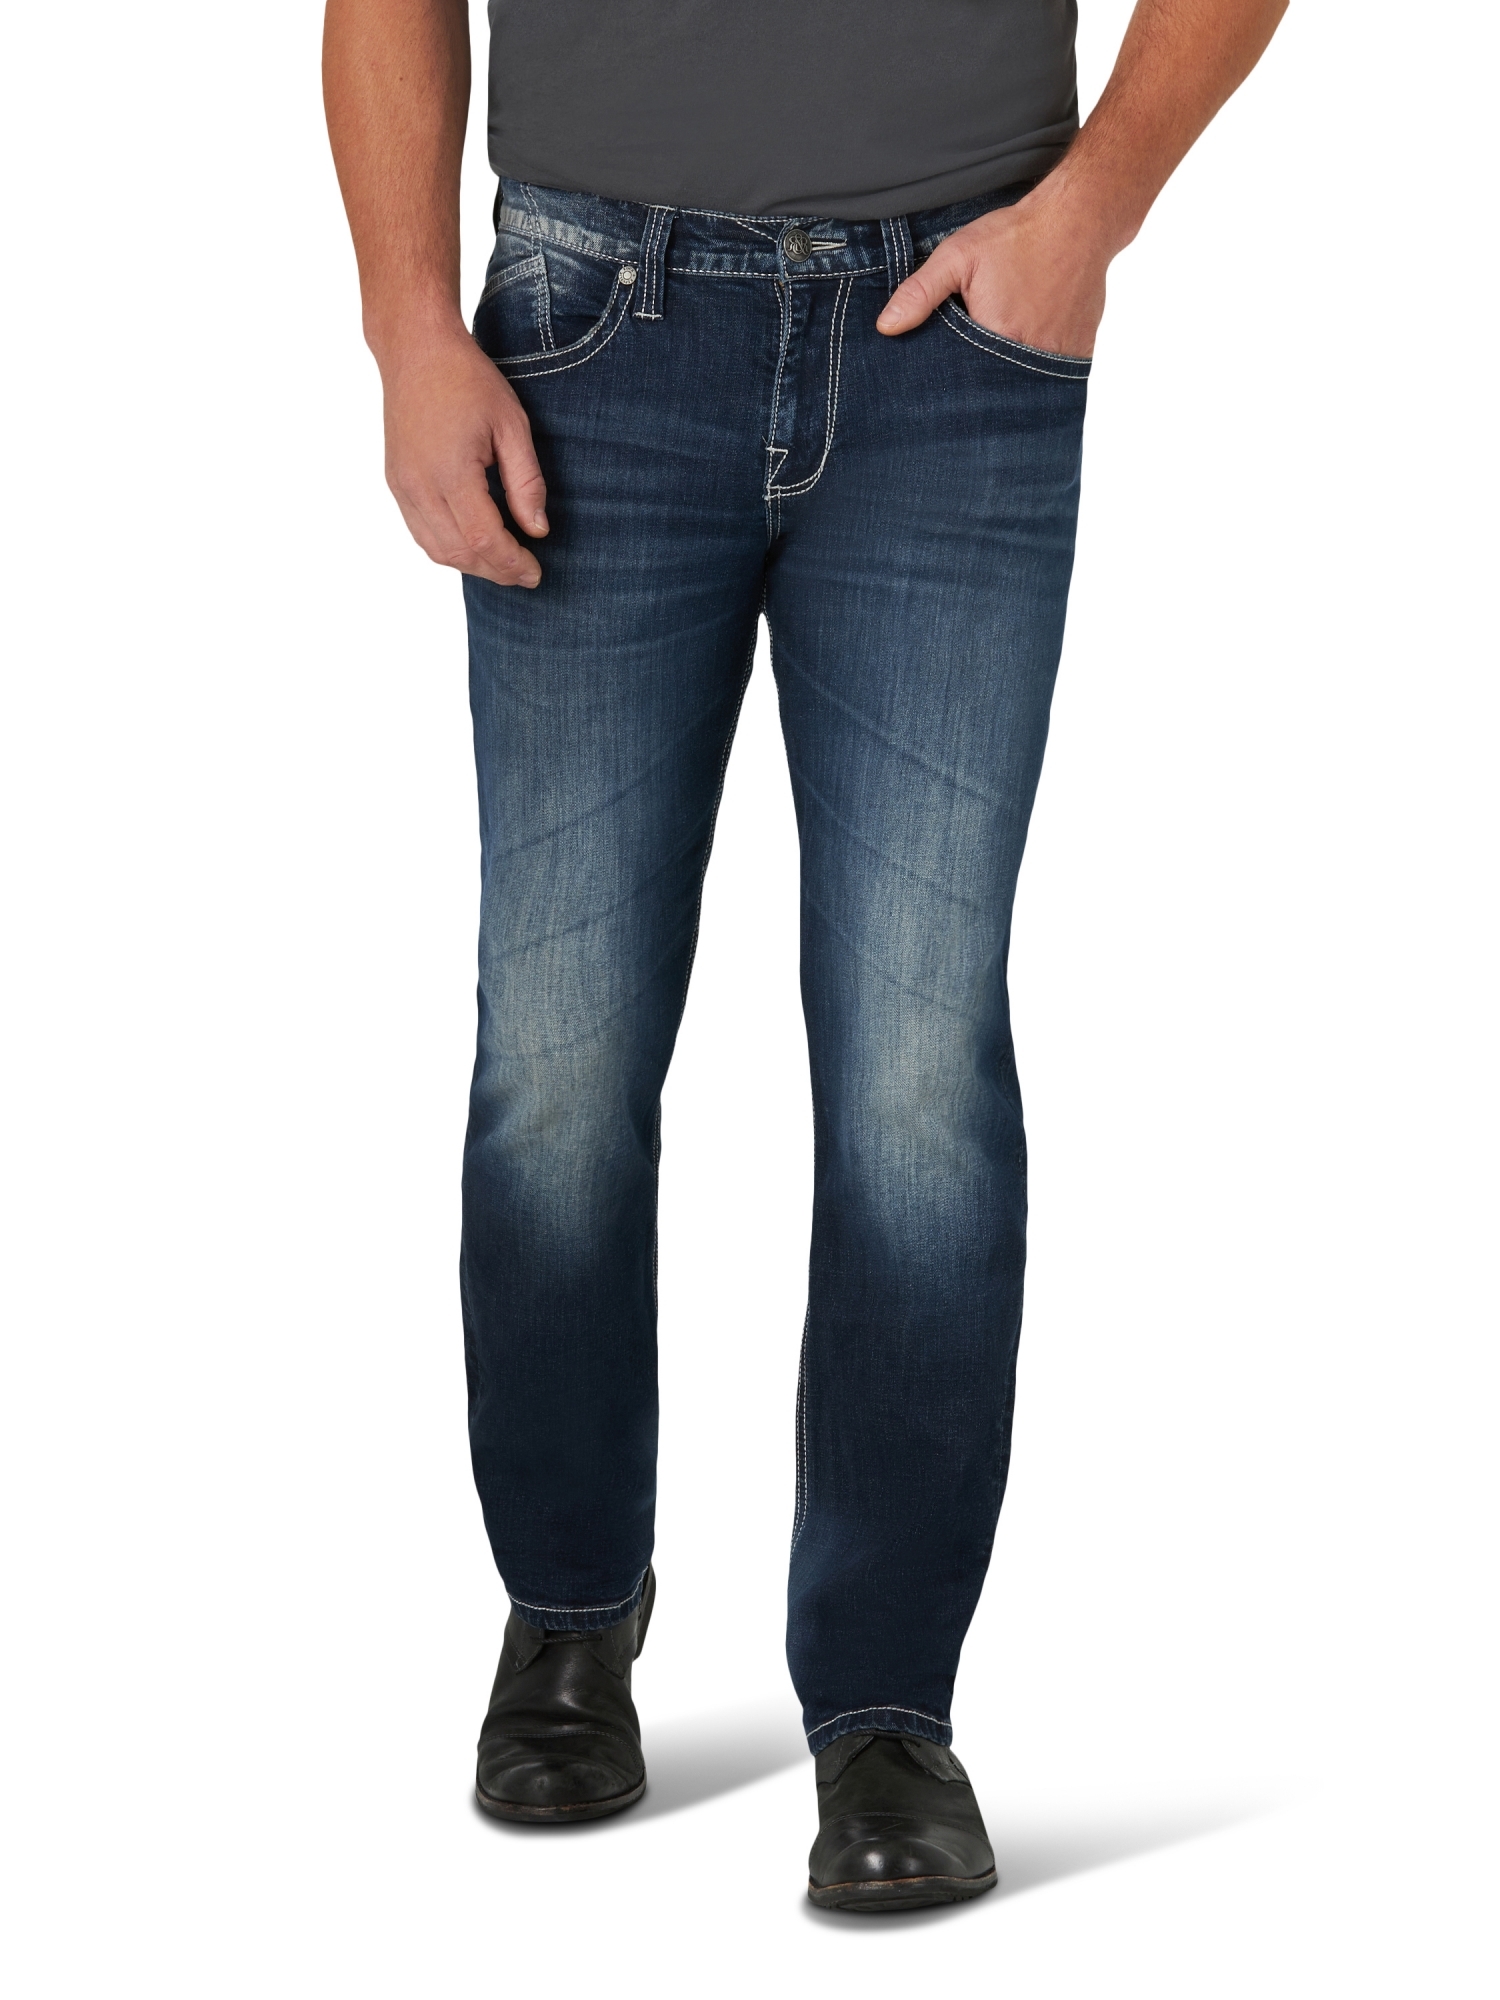 Rock & Republic Men's Slim Straight Jean with Ultra Comfort Denim - image 1 of 6